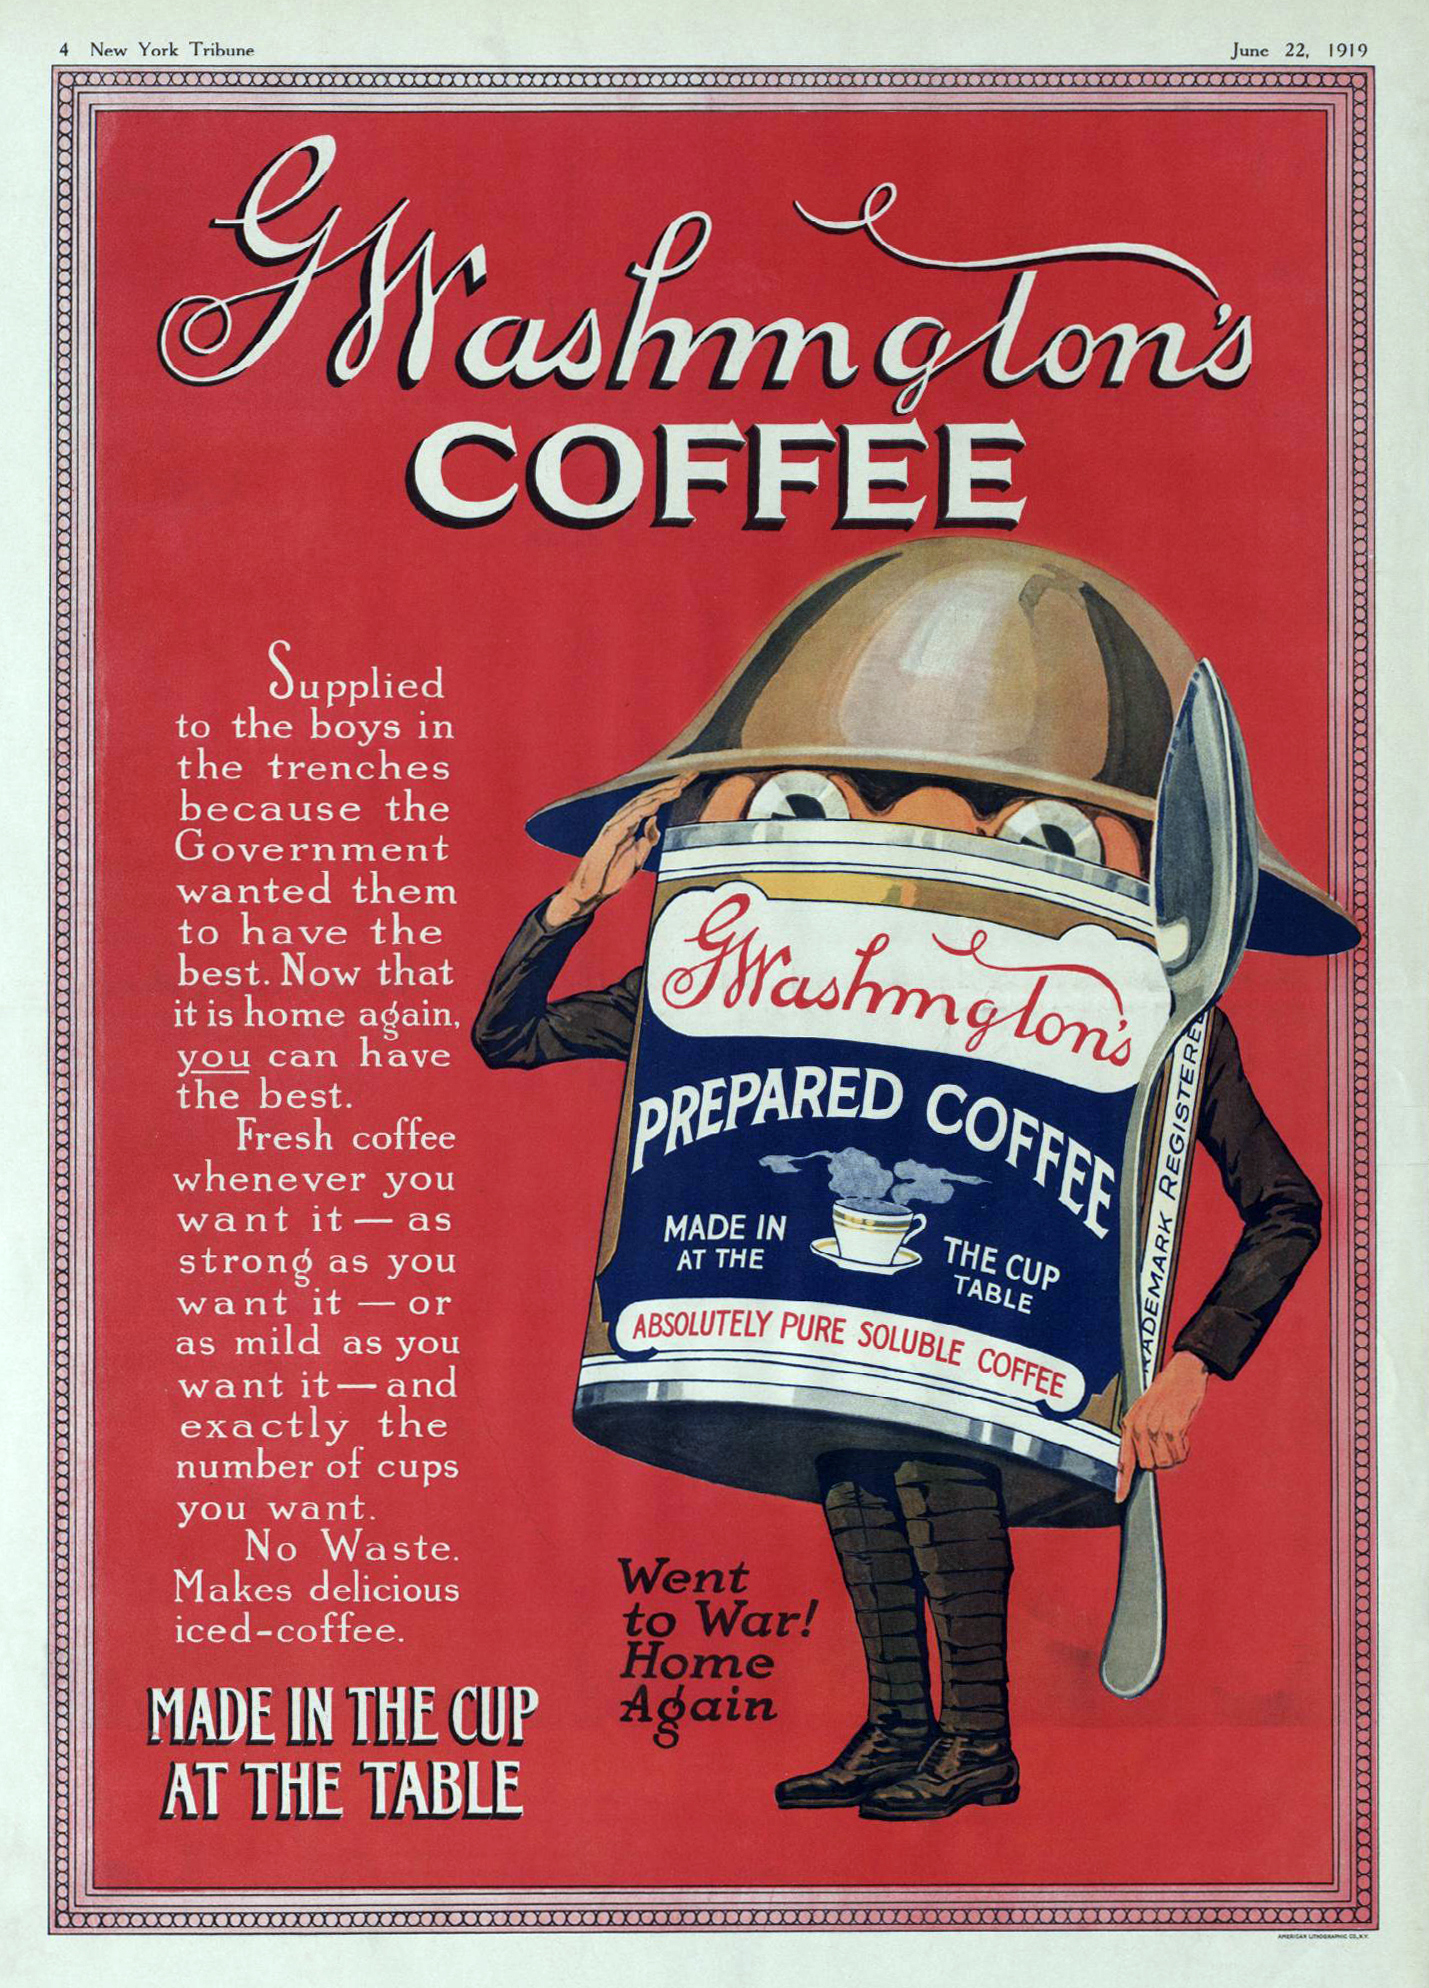 Washington_Coffee_New_York_Tribune.JPG